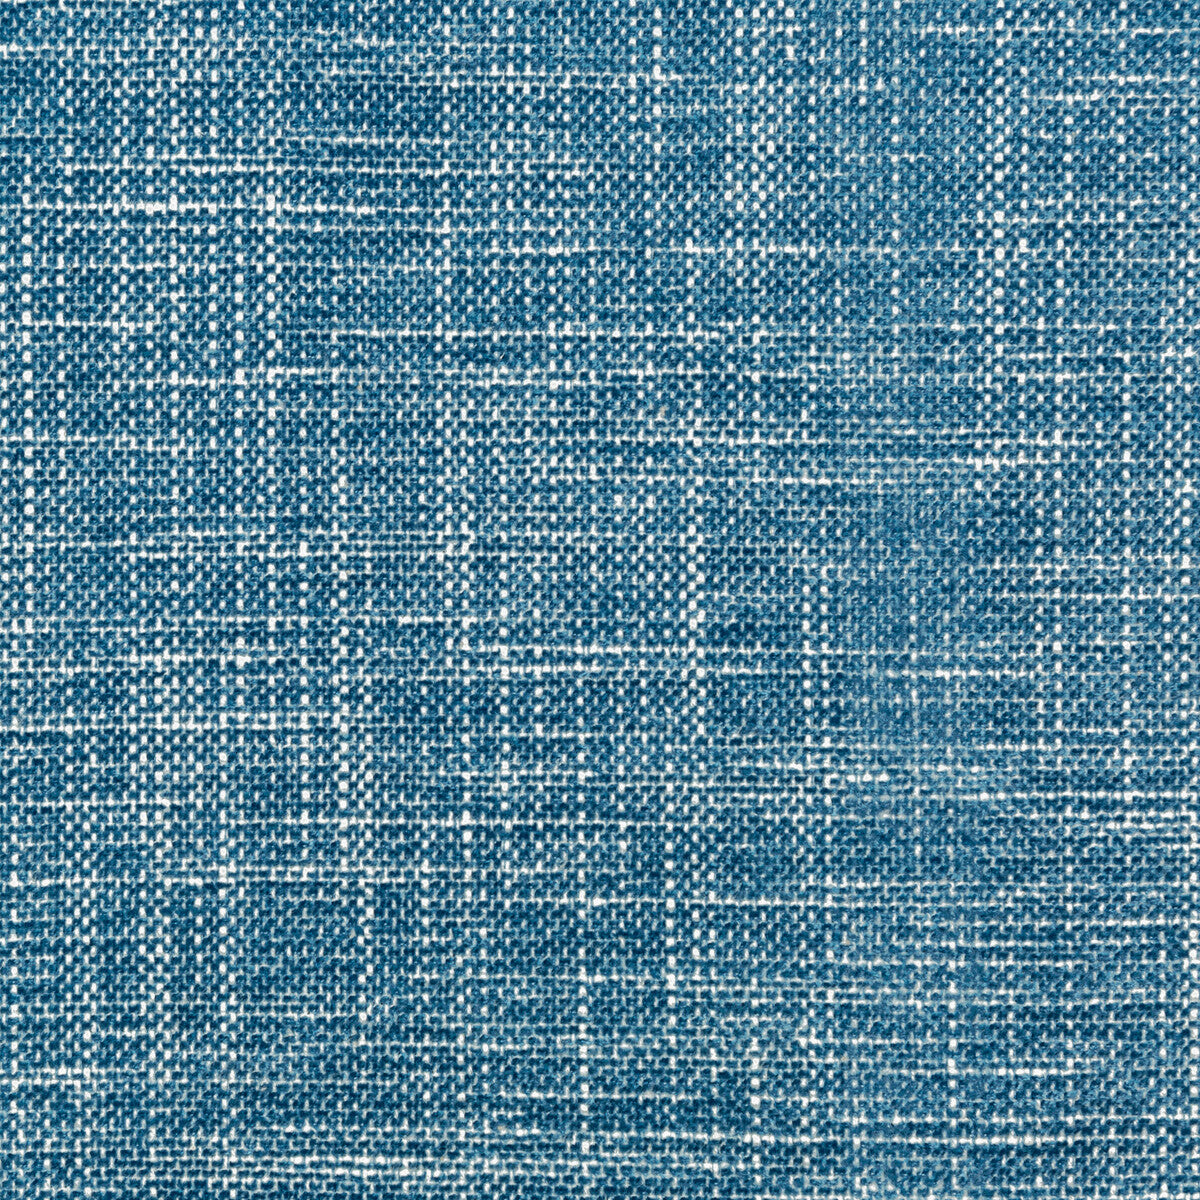 Okanda fabric in indigo color - pattern 35768.5.0 - by Kravet Smart in the Performance Kravetarmor collection